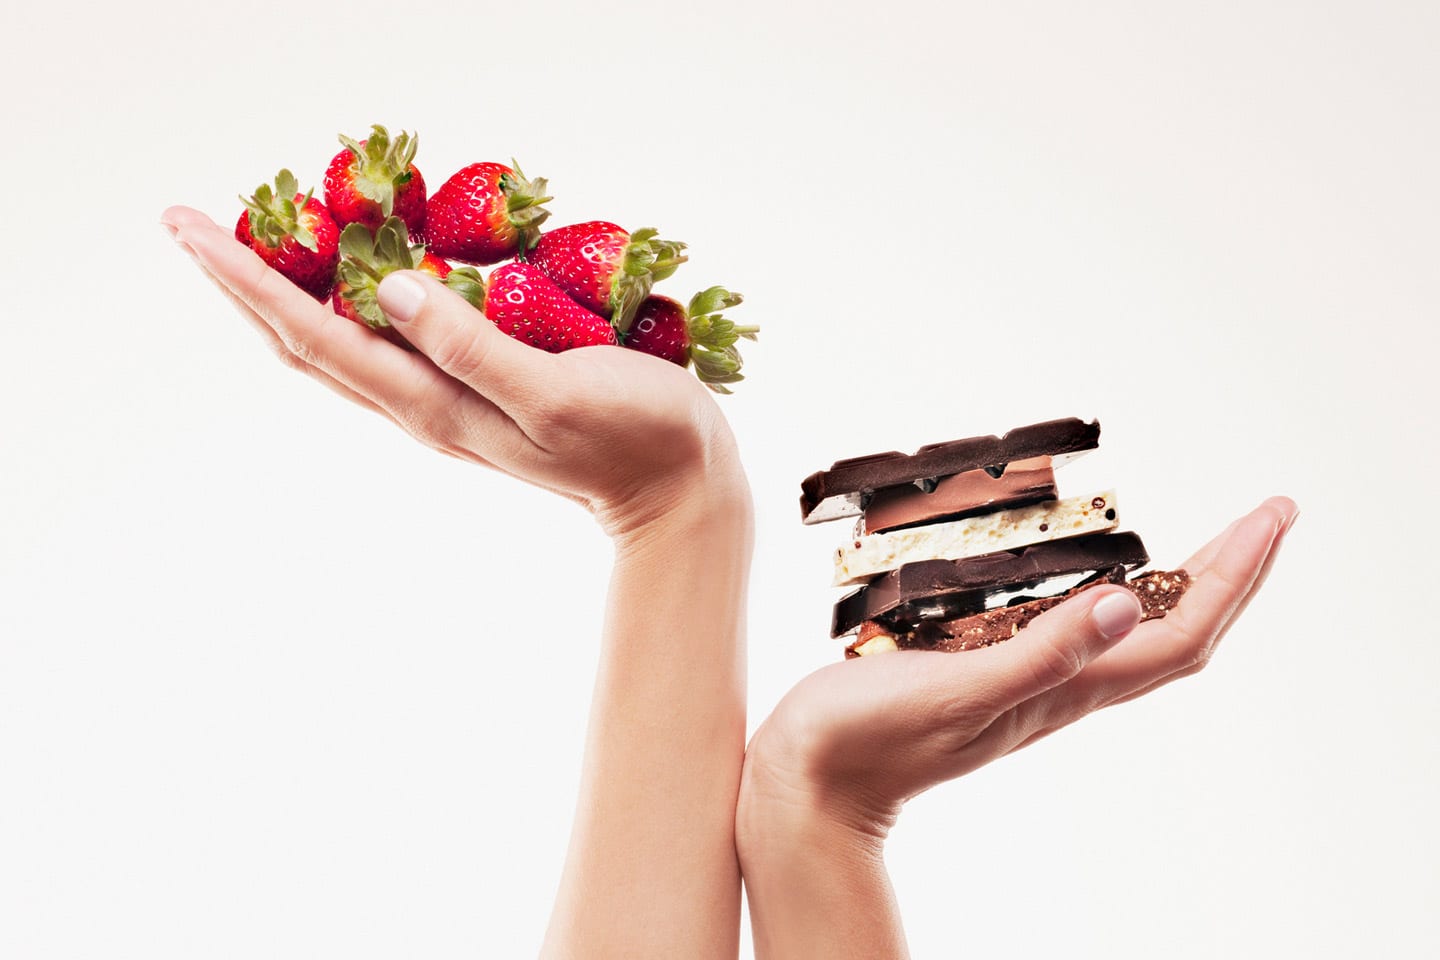 Handing Weighing Sugary Foods Strawberries and Chocolate in Chattanooga